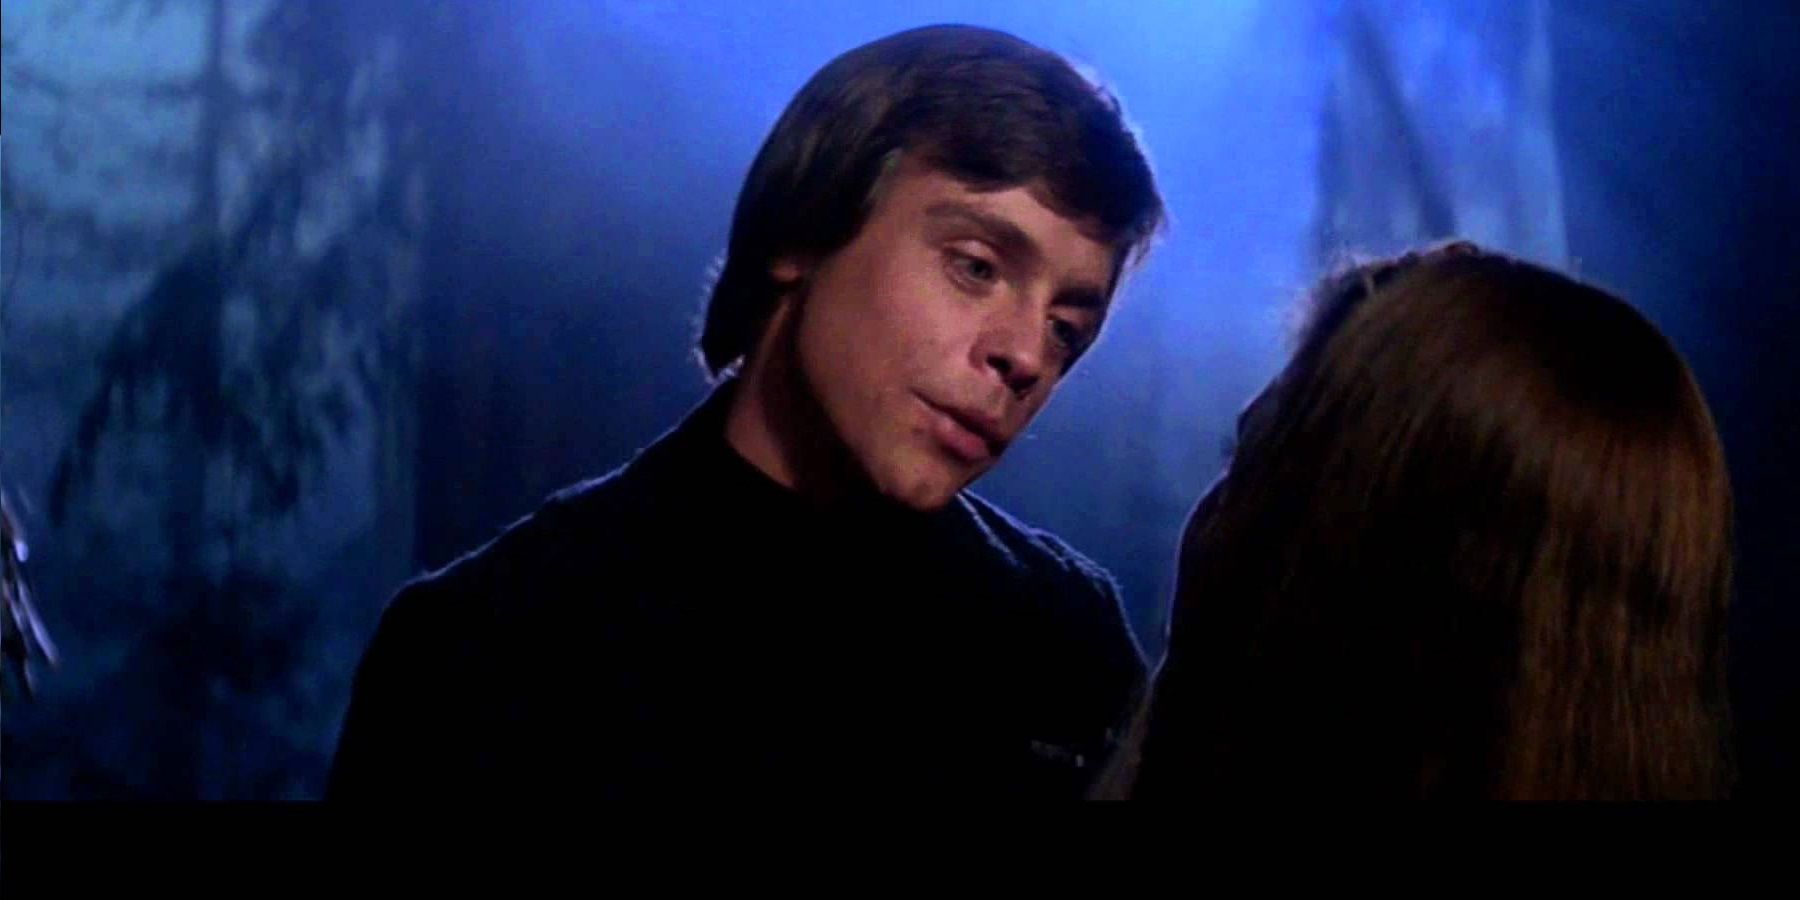 Luke and Leia in Star Wars